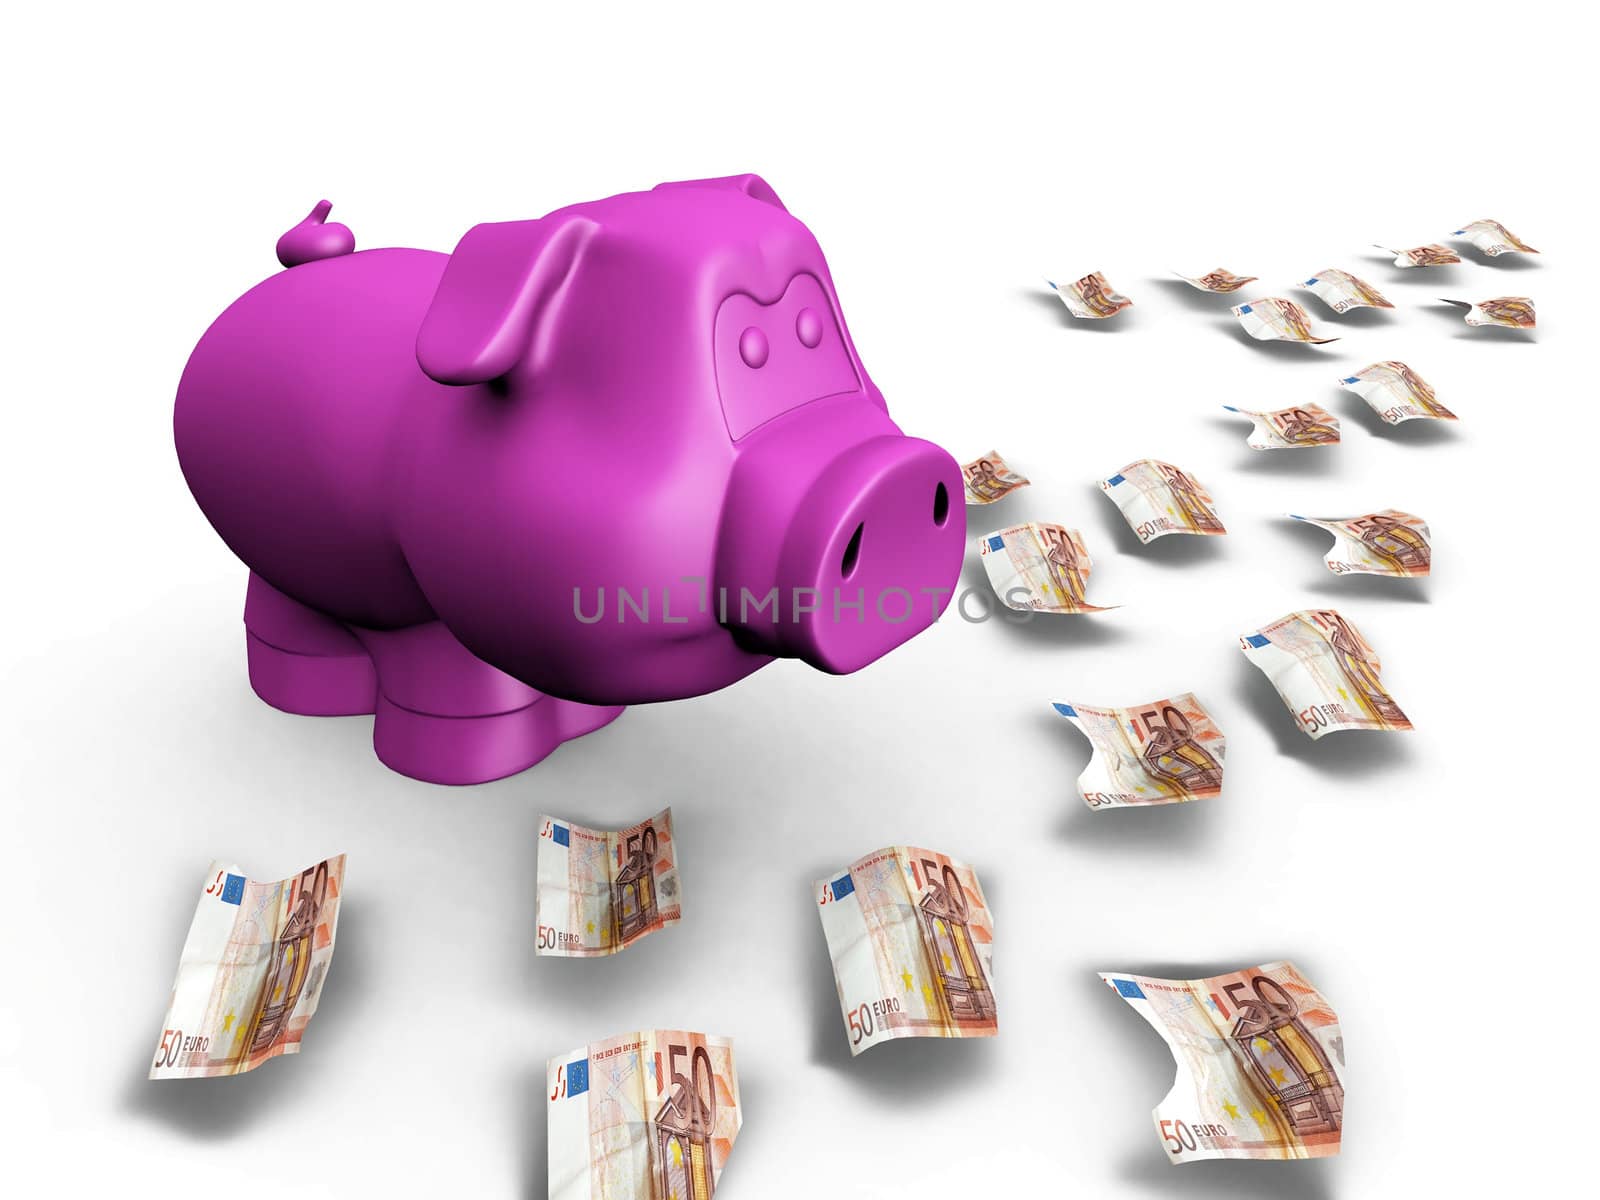 piggy bank and euro banknotes